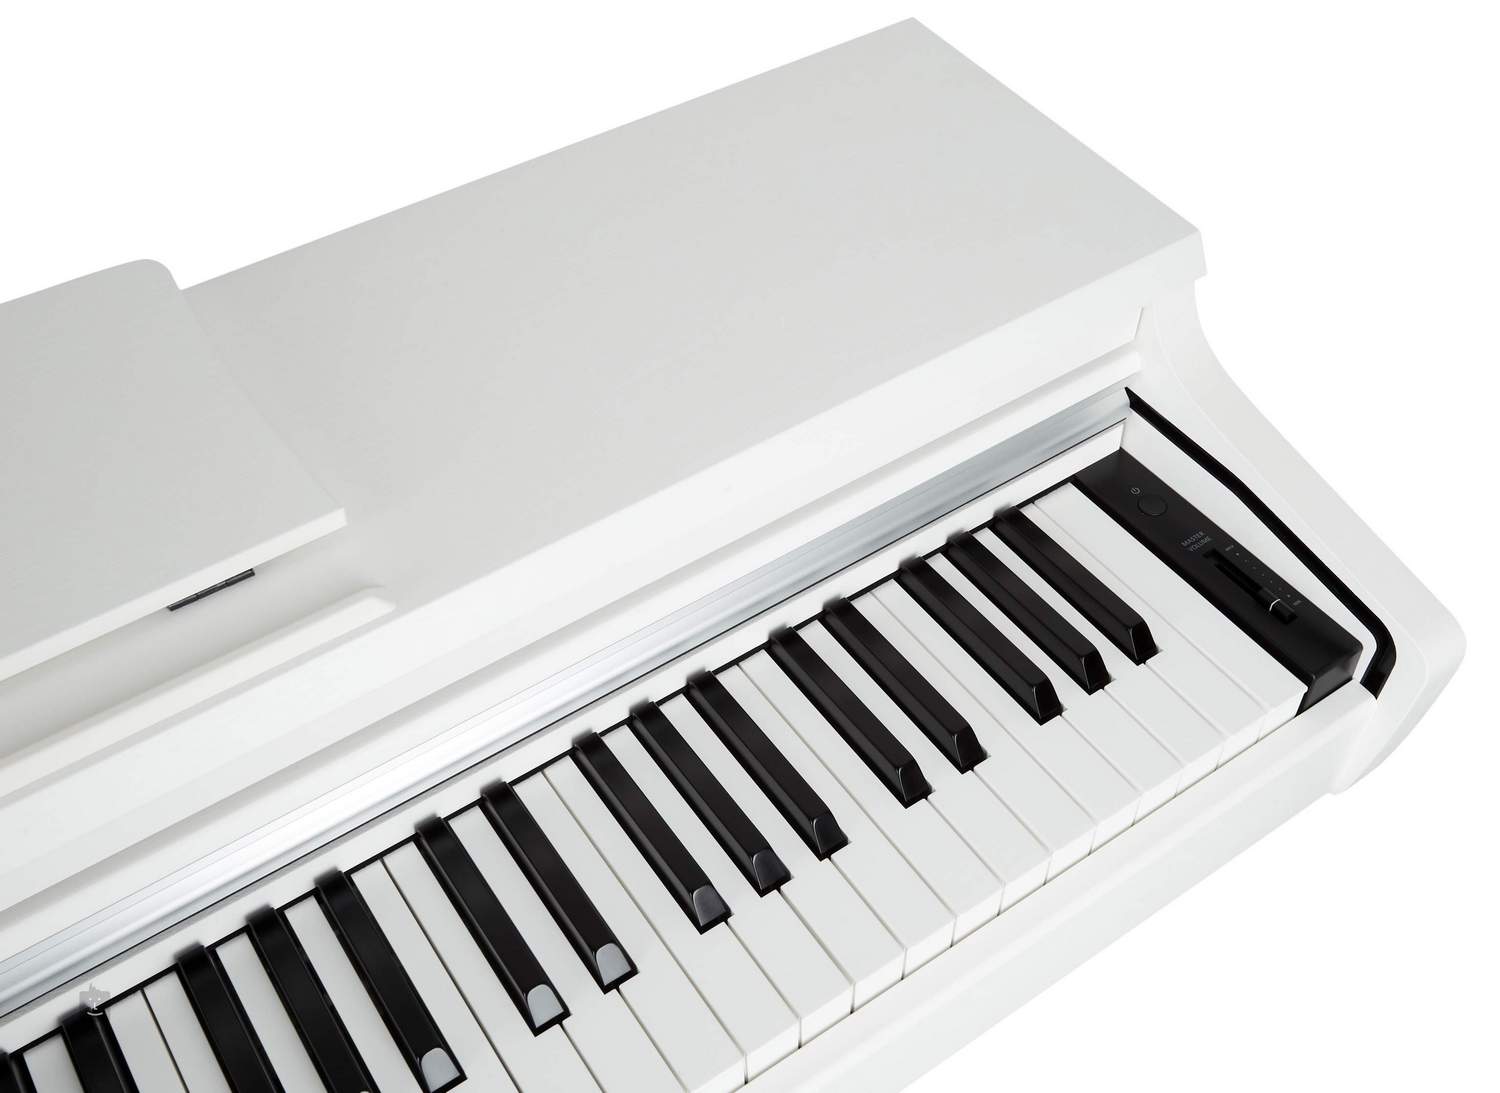 Цифровое пианино KAWAI KDP120W